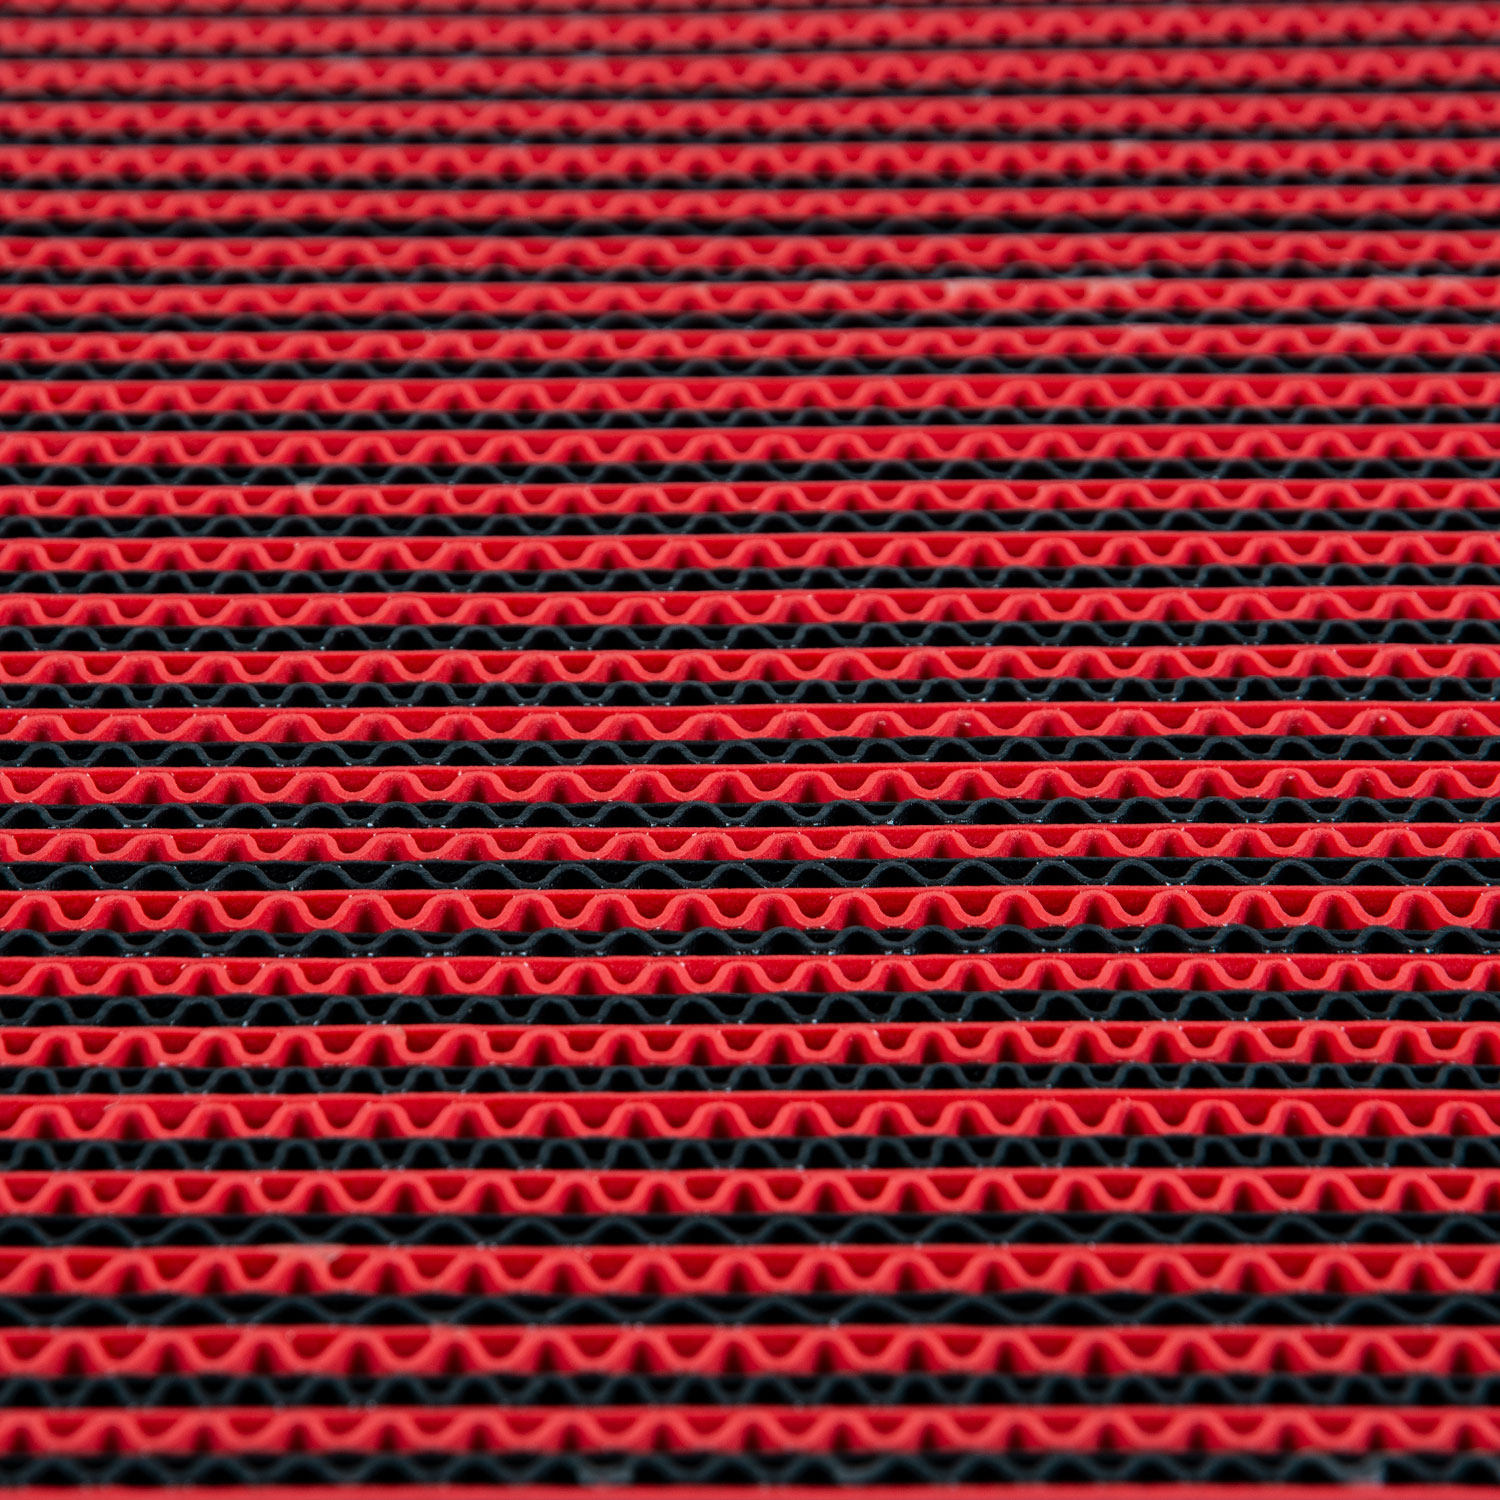 PVC Antirutschmatte schwarz/rot klein 200x120cm - Technikplaza